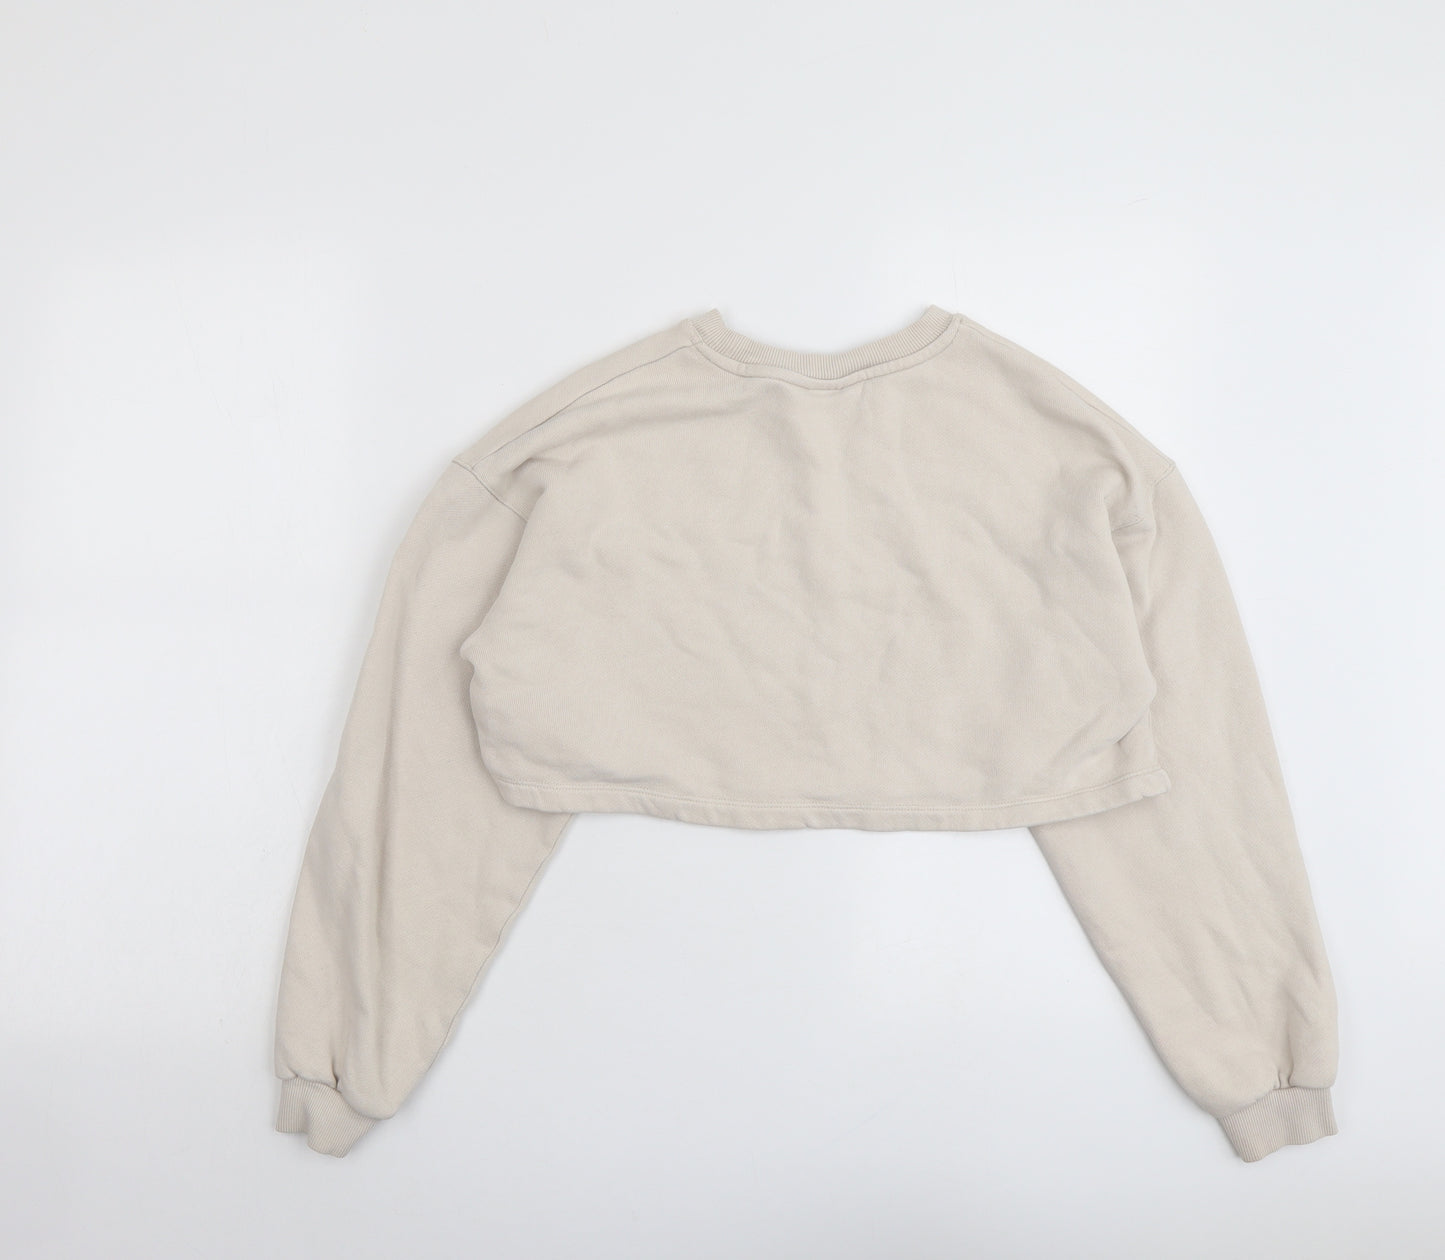 ASOS Womens Beige Cotton Pullover Sweatshirt Size 8 Pullover